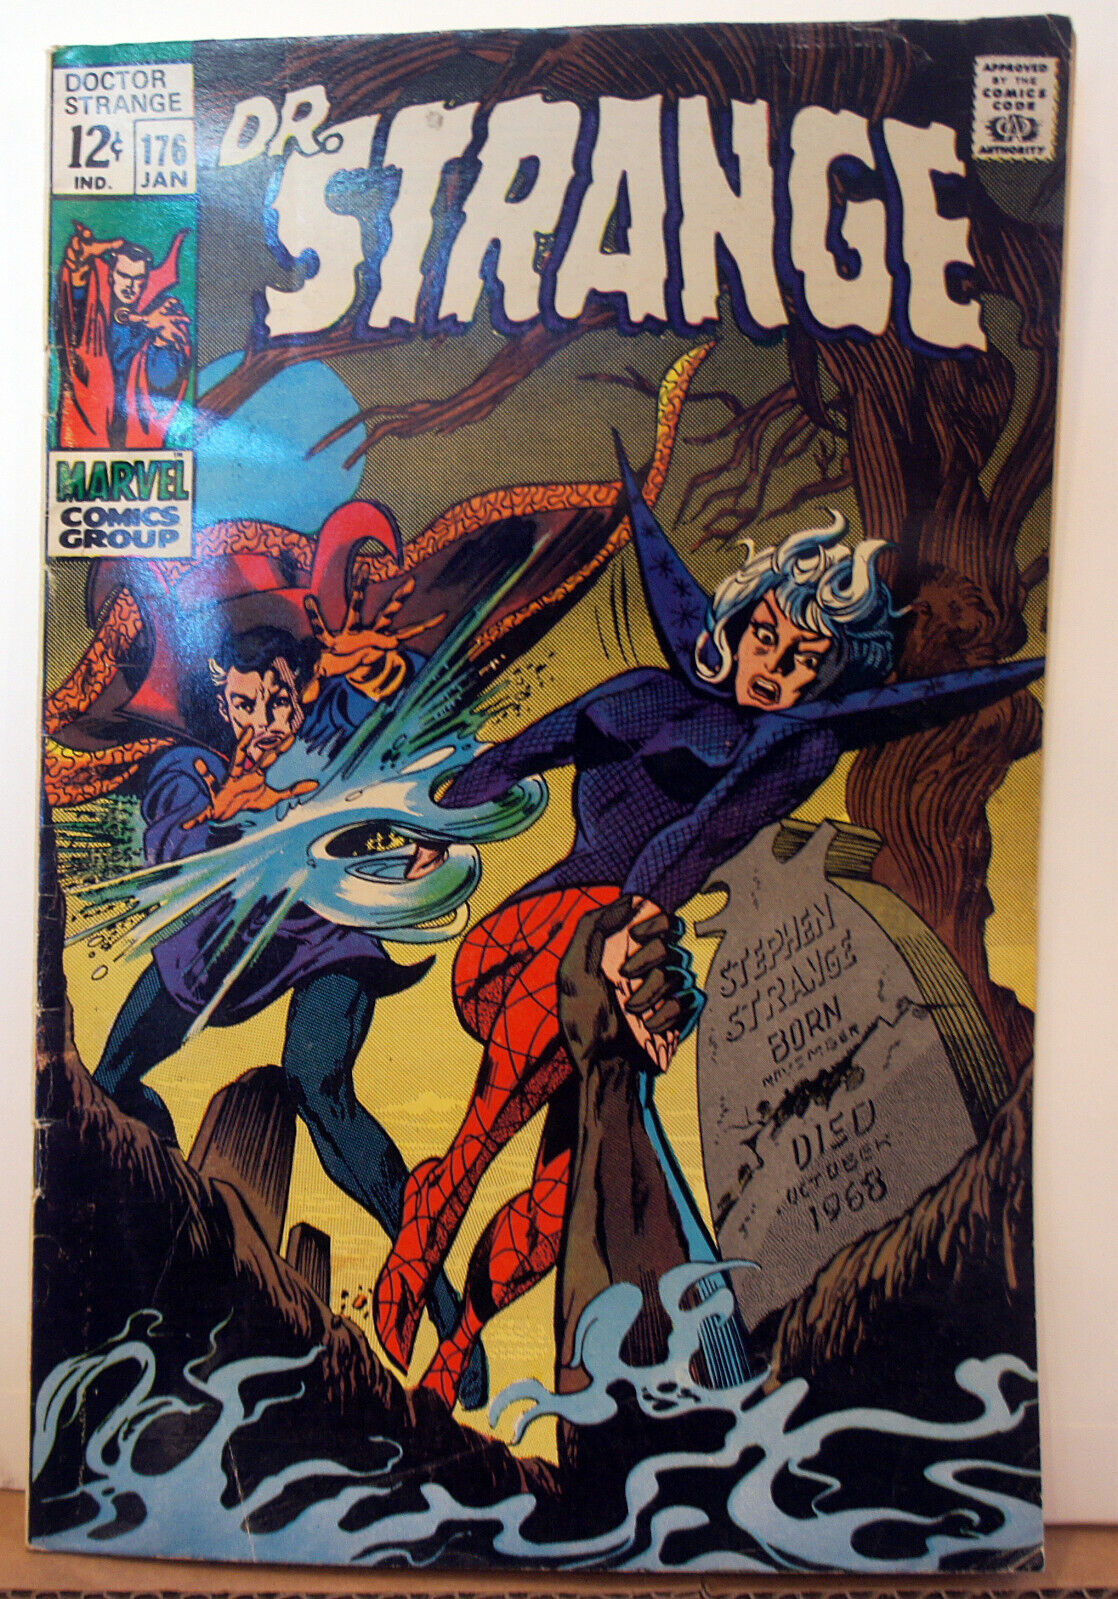 DR. STRANGE #176 (1969) COVER AND INTERIOR ART BY GENE COLAN